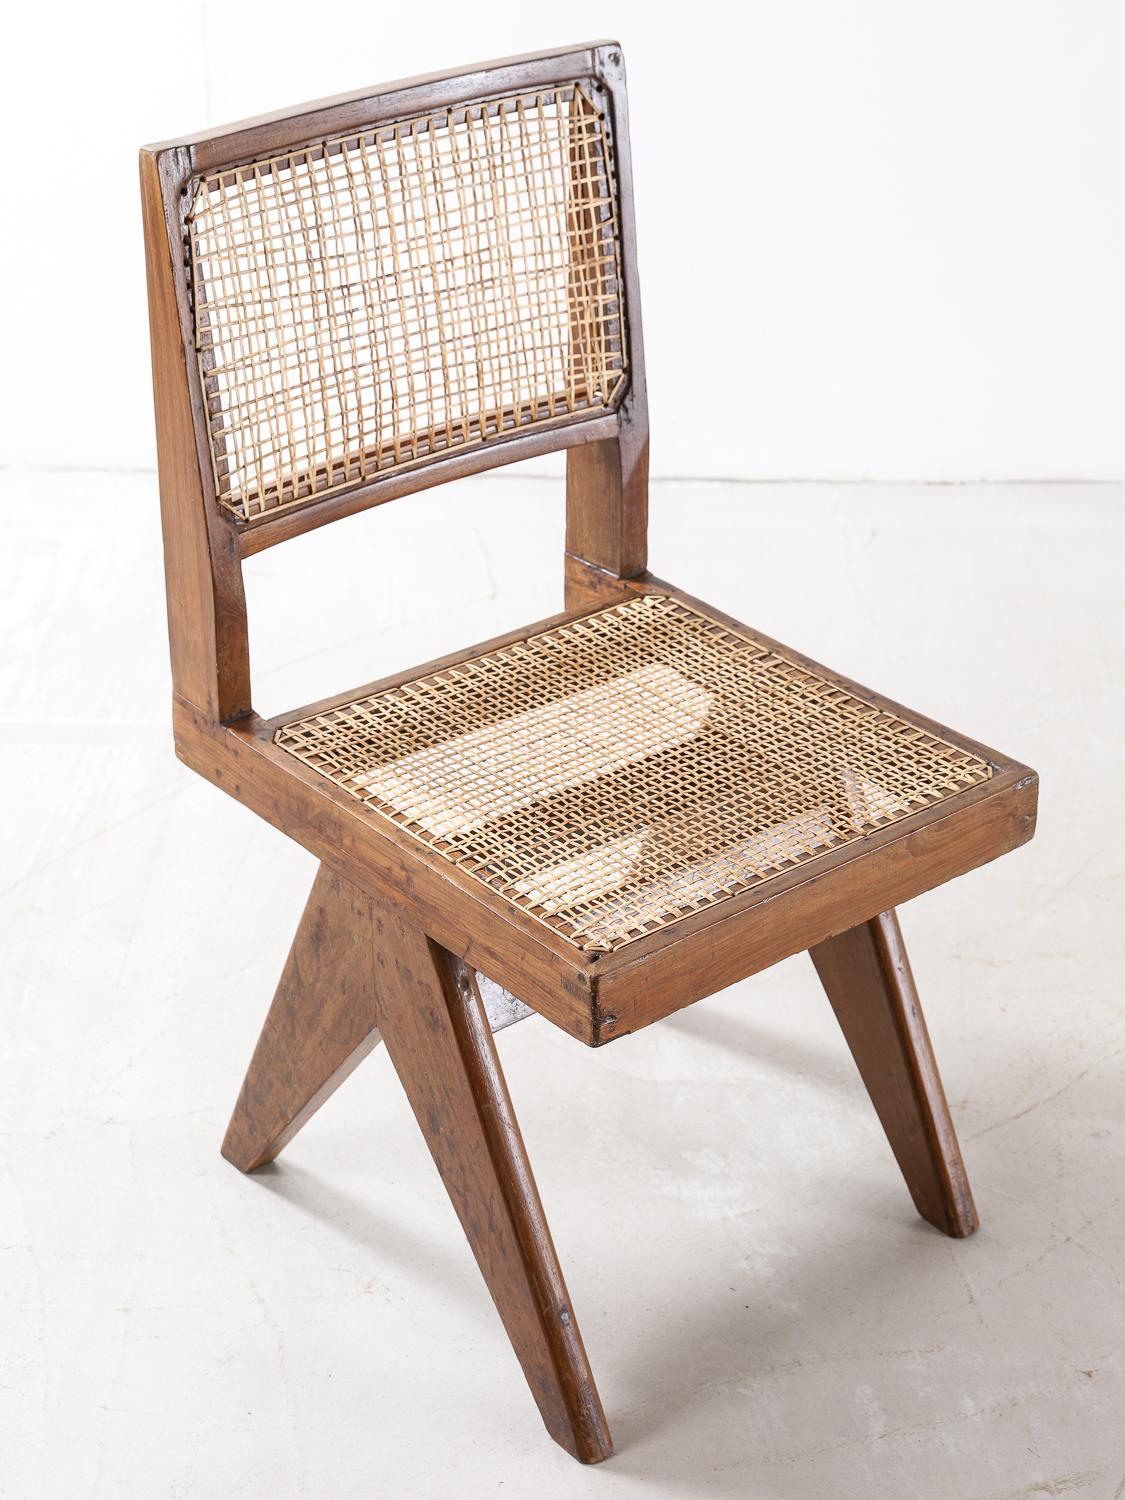 Mid-20th Century Pierre Jeanneret Chair, circa 1958-1959